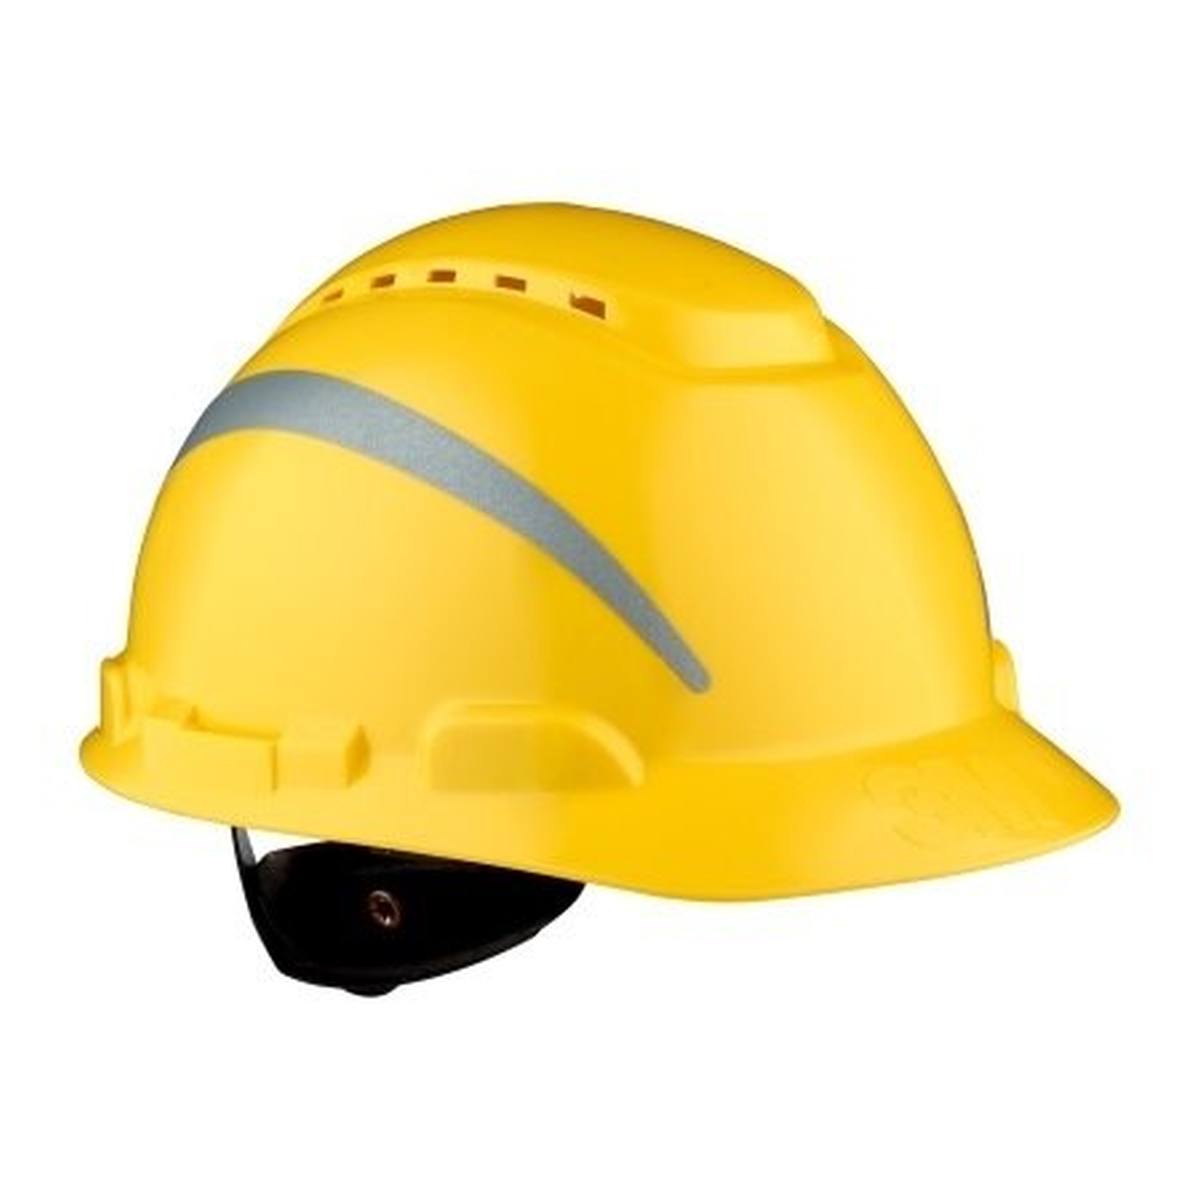 3M G3000 veiligheidshelm met UV-indicator, geel, ABS, geventileerde ratelsluiting, kunststof zweetband, reflecterende sticker